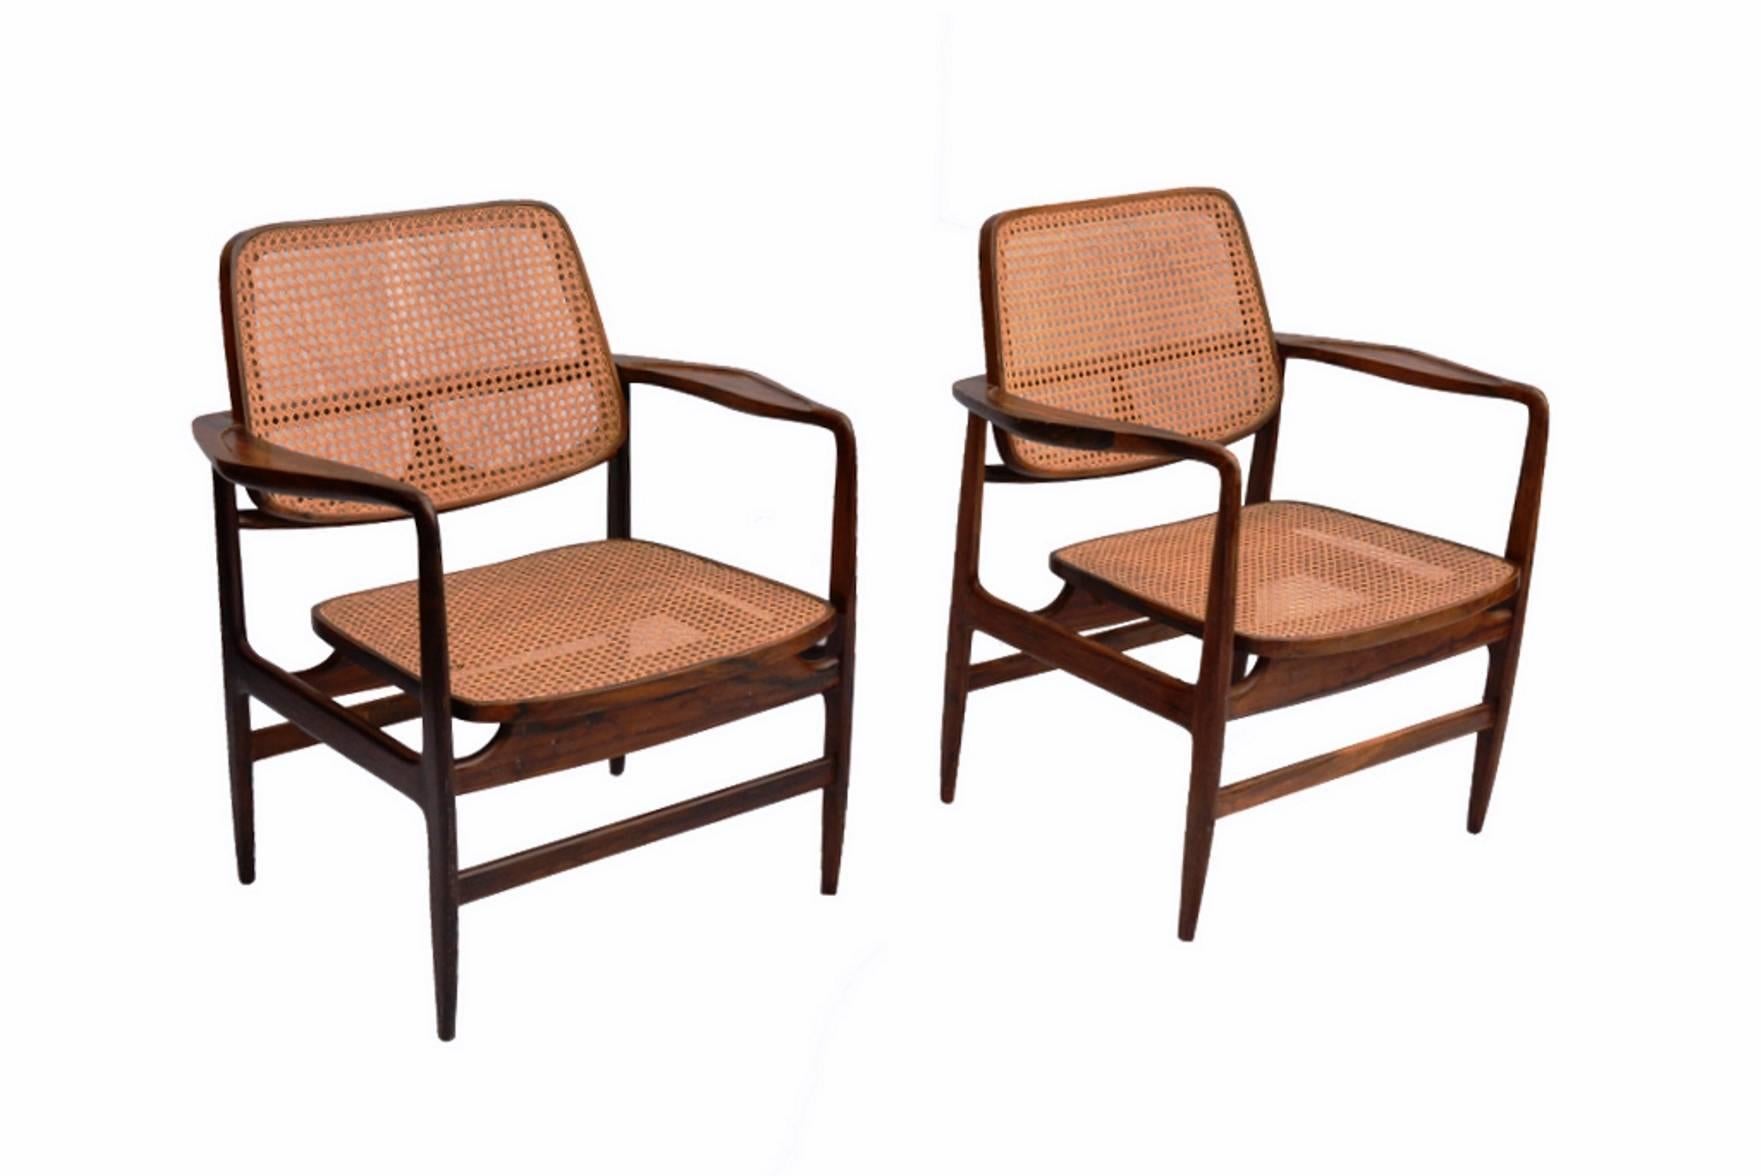 Original set of 12 Oscar armchair in Jacaranda wood and cane seating.